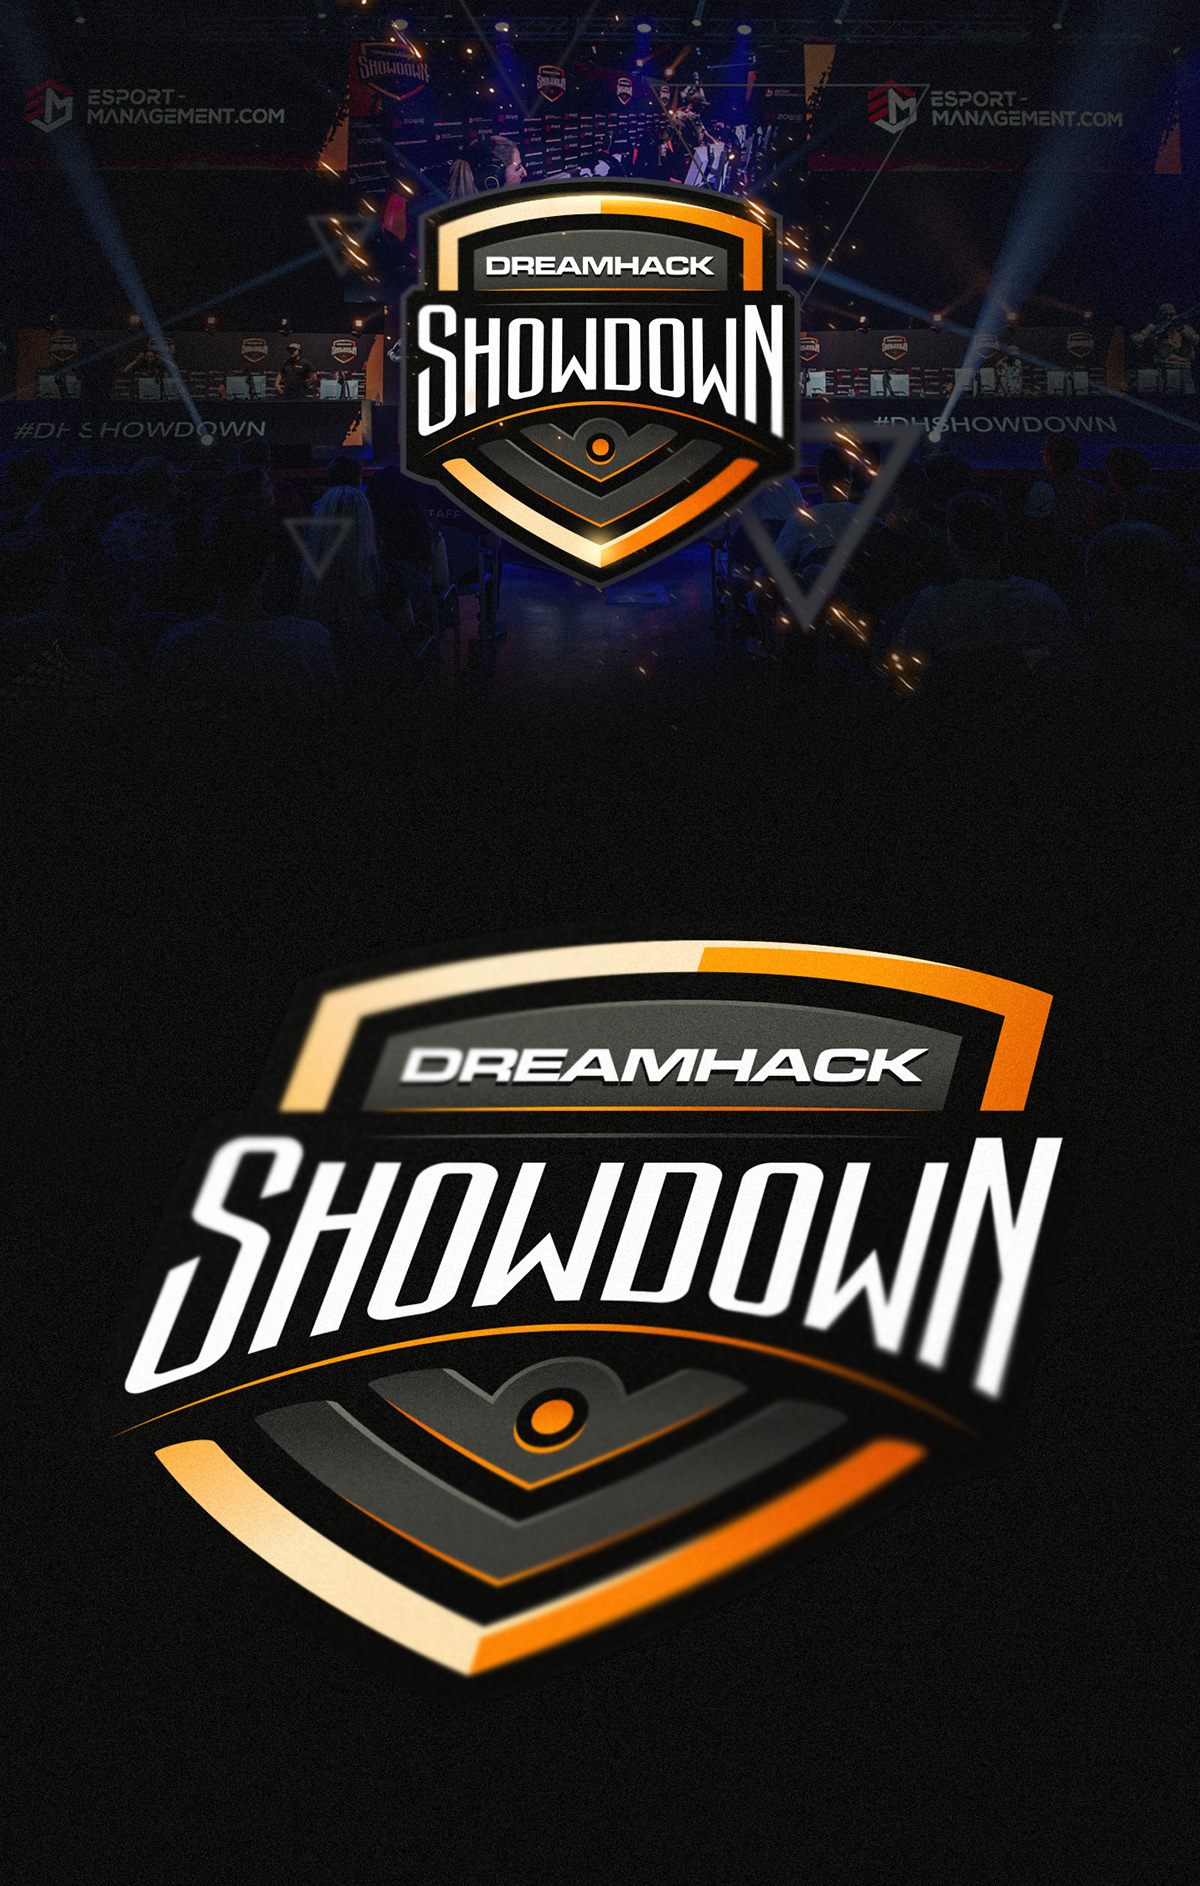 Sports logo esports logo  badge mark dreamhack Showdown Tournament mascot logo logo branding 